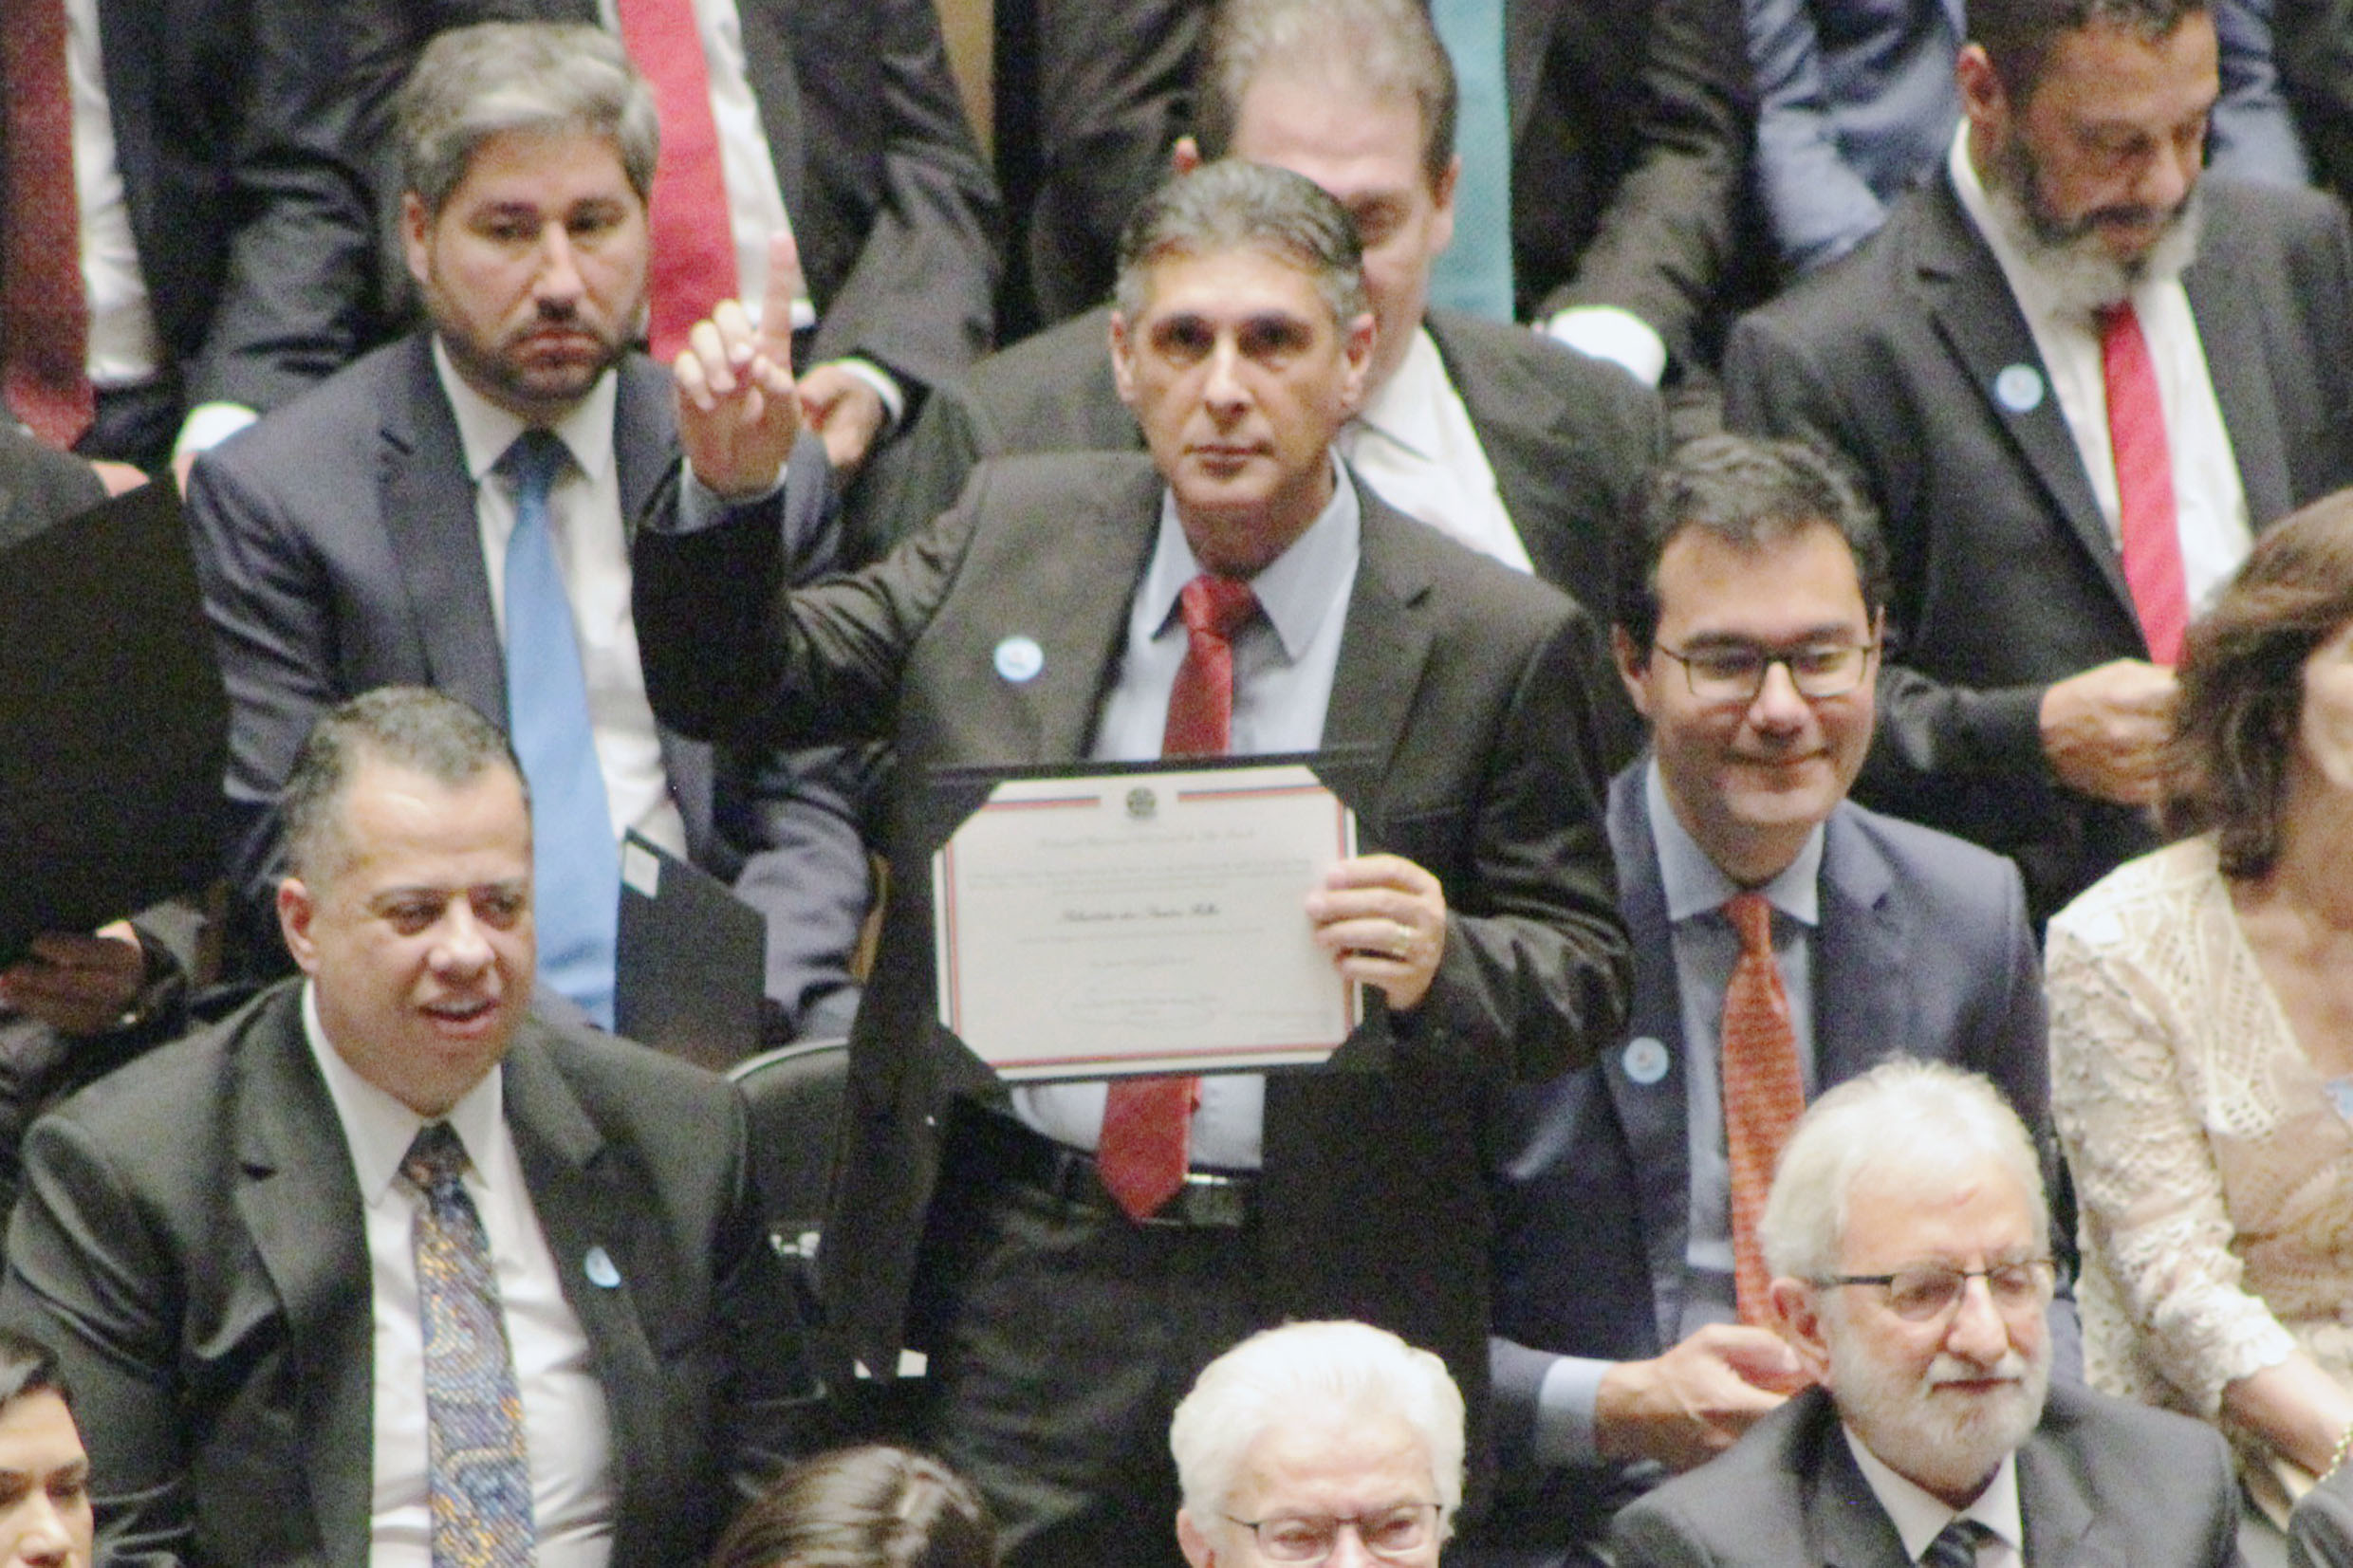 Sebastio Santos recebe diploma<a style='float:right;color:#ccc' href='https://www3.al.sp.gov.br/repositorio/noticia/N-12-2018/fg229081.jpg' target=_blank><i class='bi bi-zoom-in'></i> Clique para ver a imagem </a>